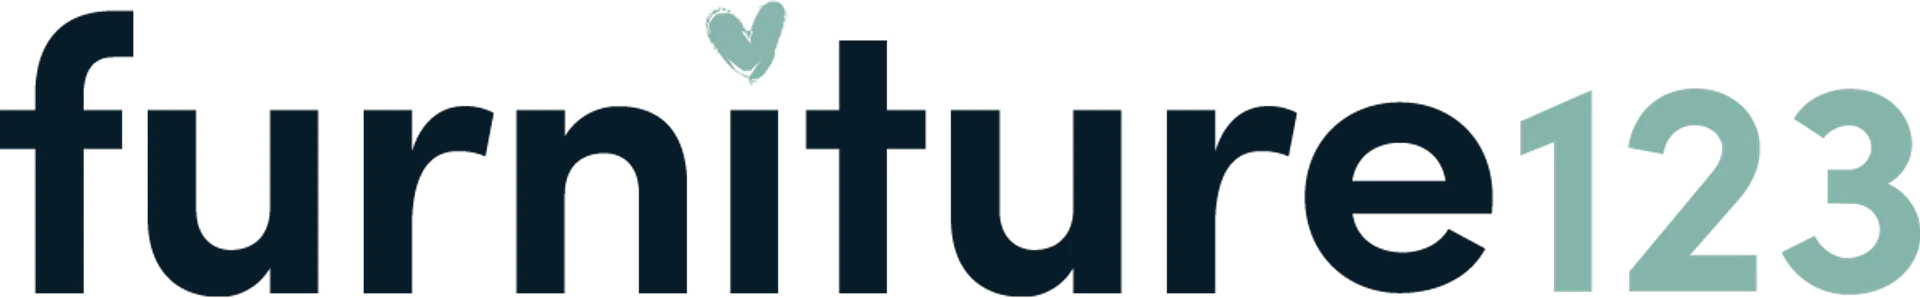 FURNITURE123 logo. Current catalogue